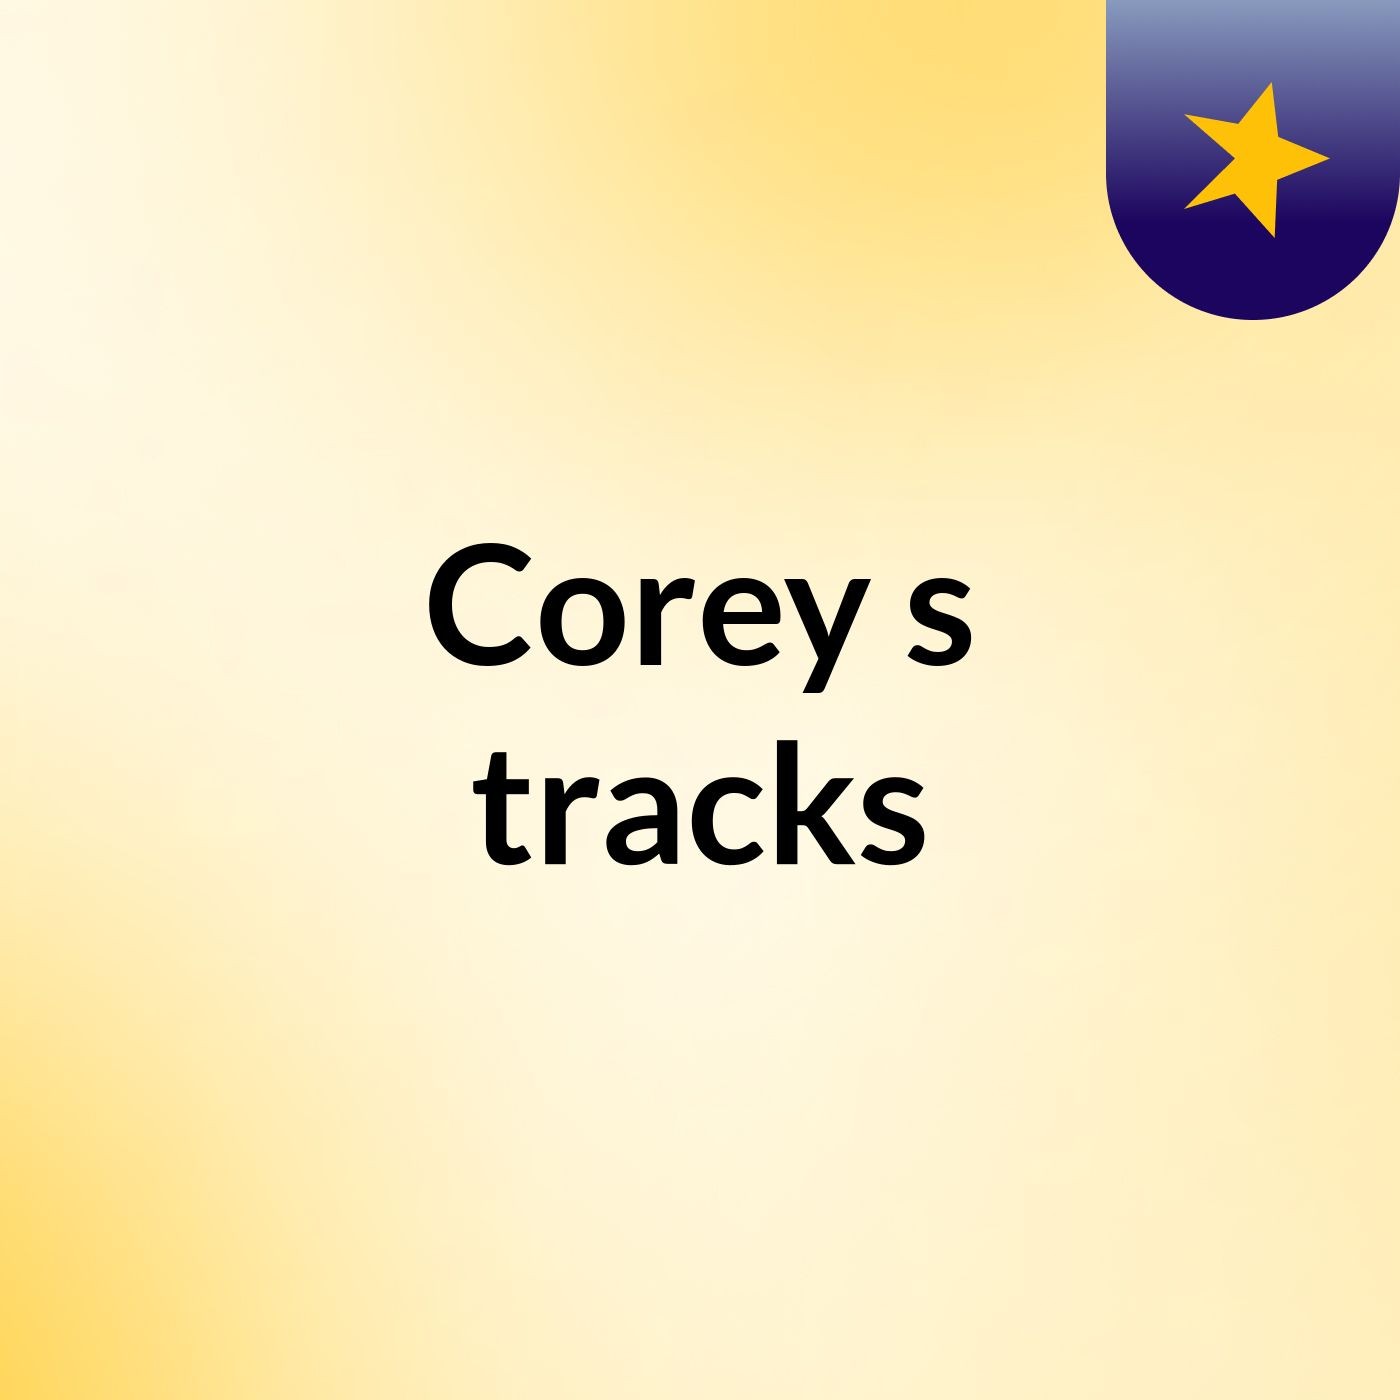 Corey's tracks